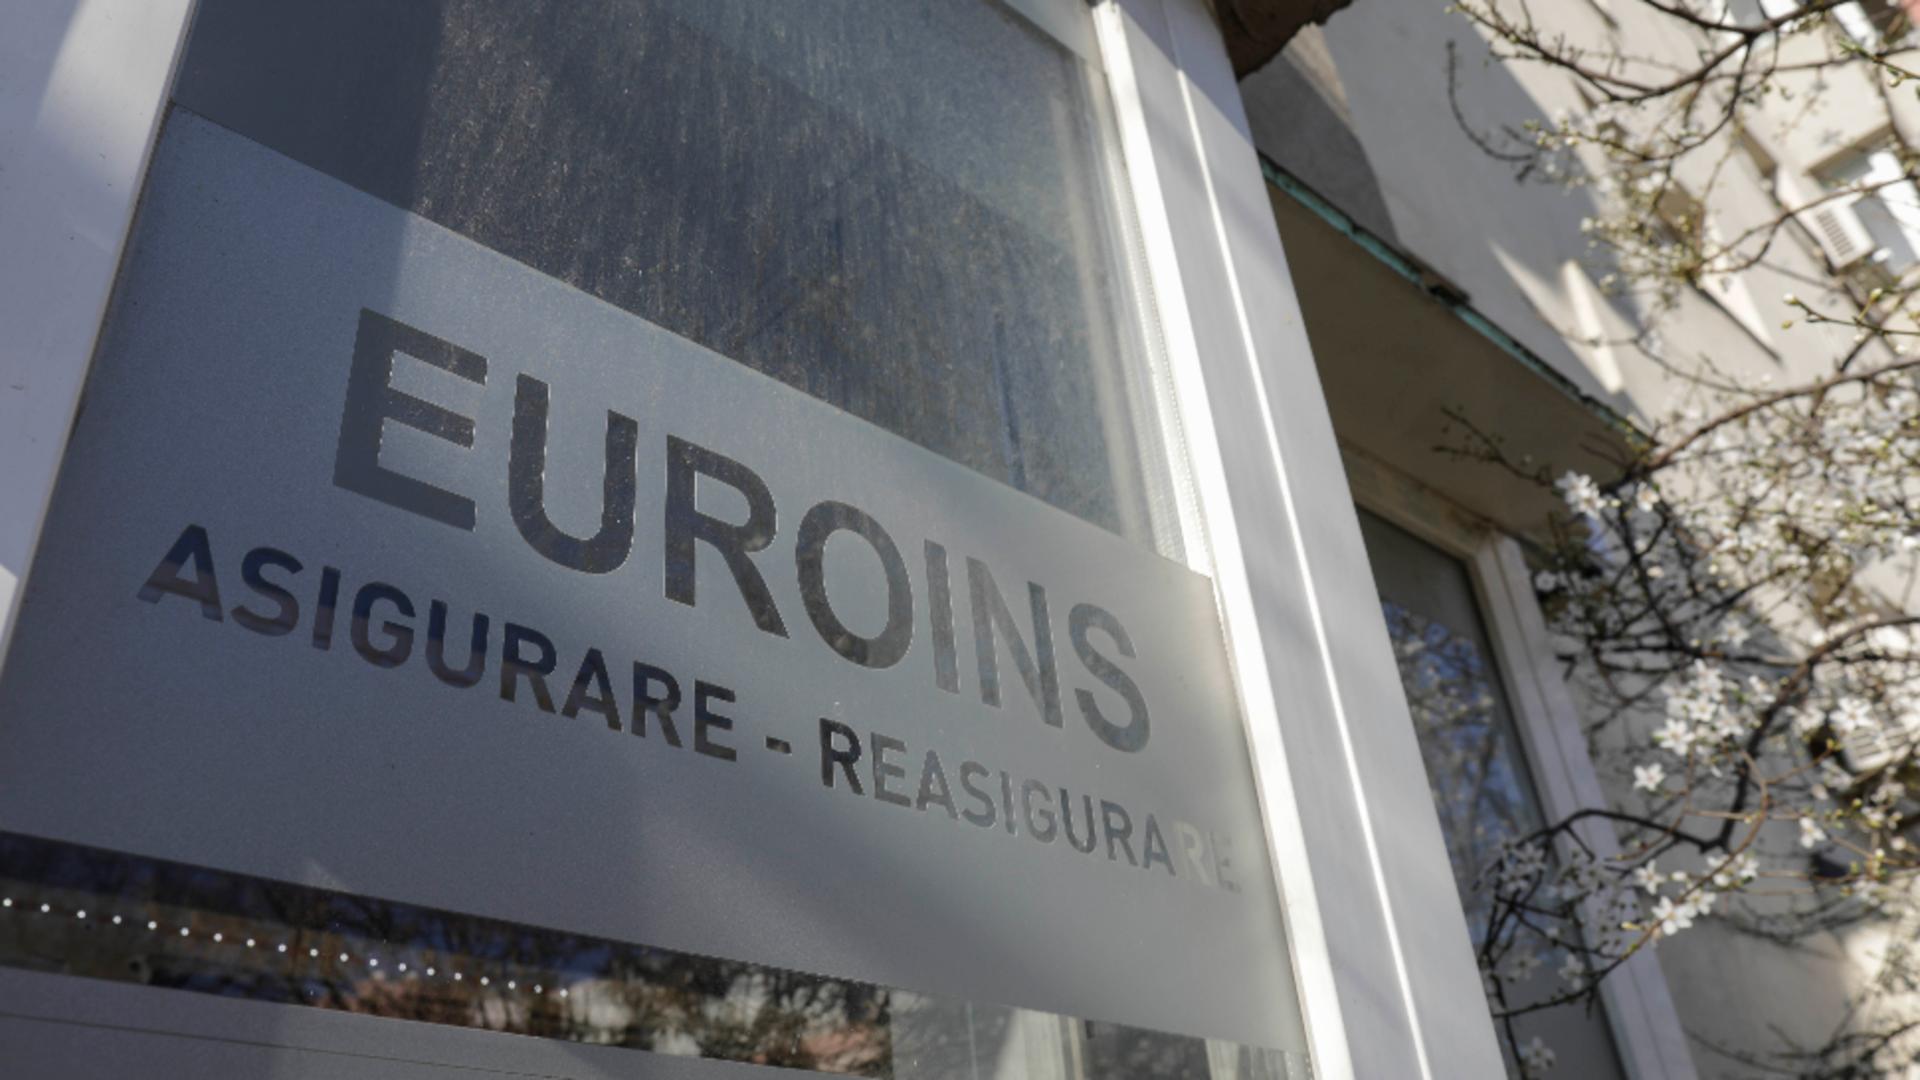 Reacția Euroins după retragerea licenței - Foto: INQUAM